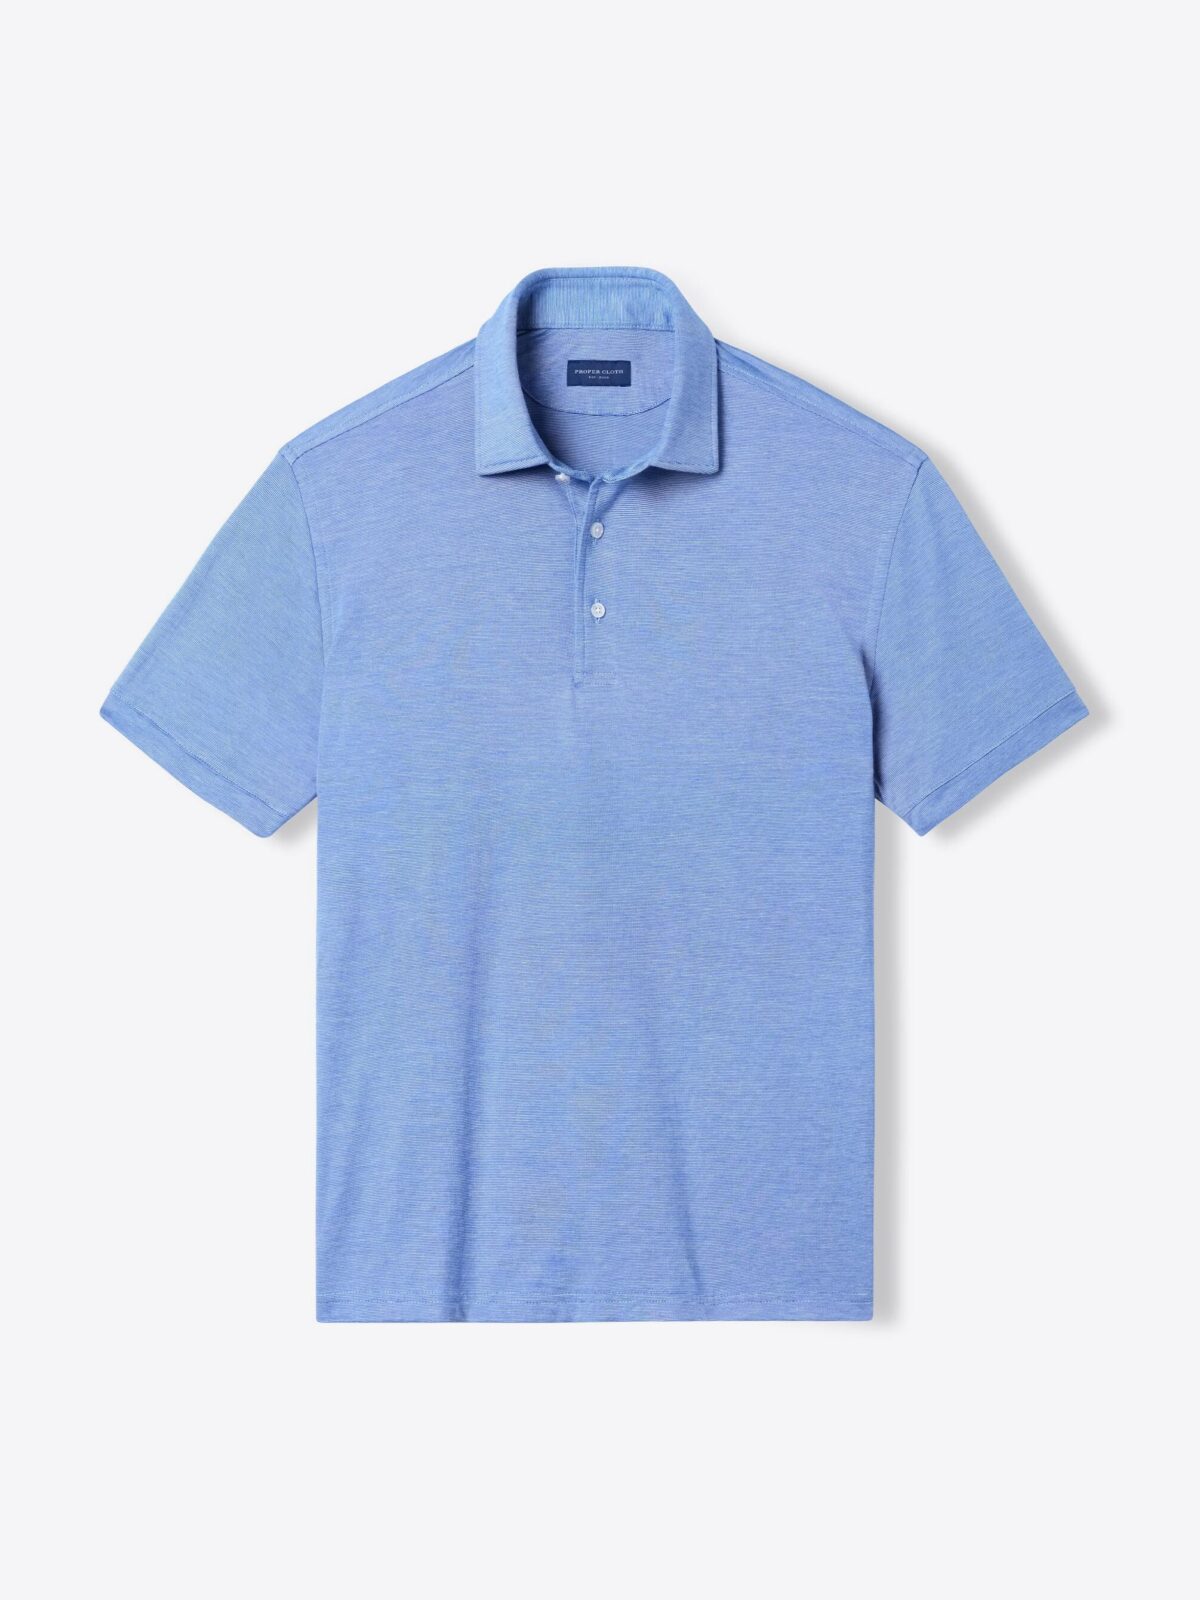 by Shirt Blue Pinehurst Jersey Proper Cotton and Melange Tencel Cloth